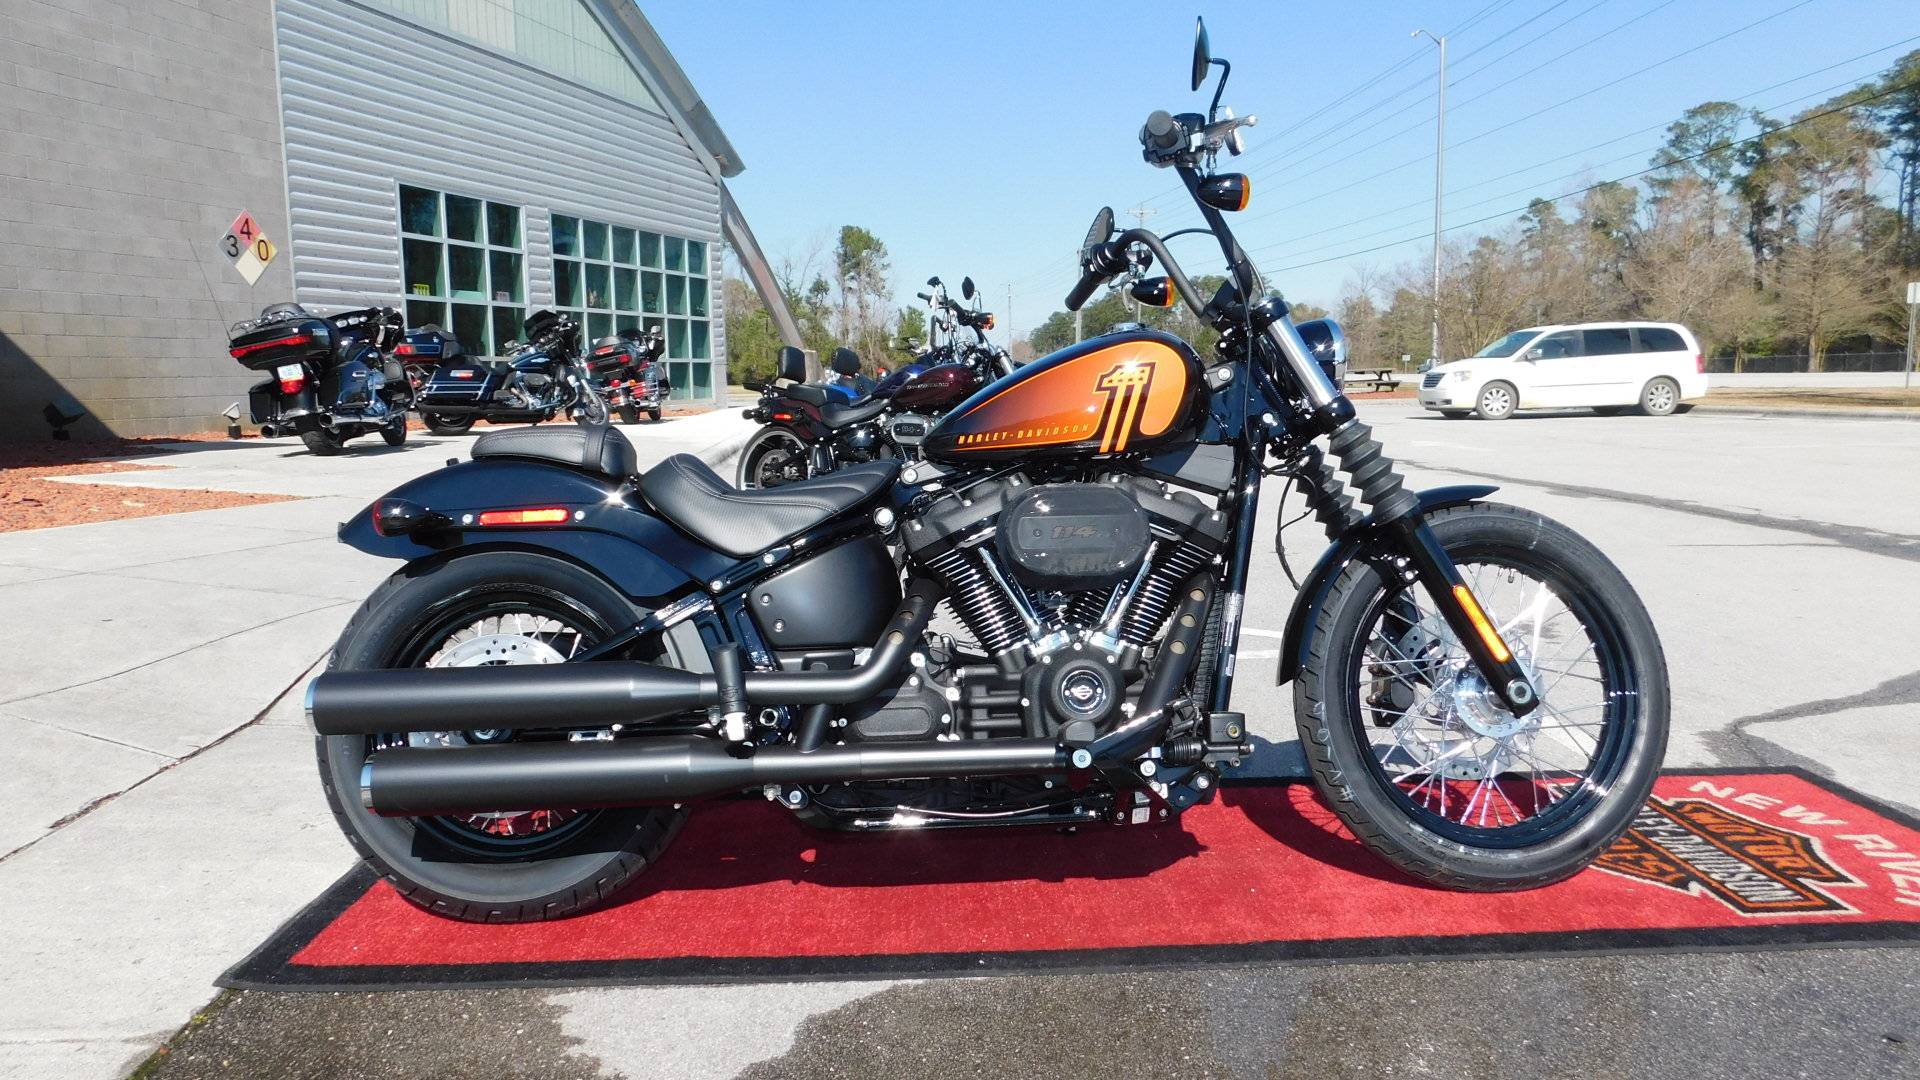 New 2021 Harley Davidson Street Bob 114 Motorcycles In Jacksonville Nc Nrhd0003